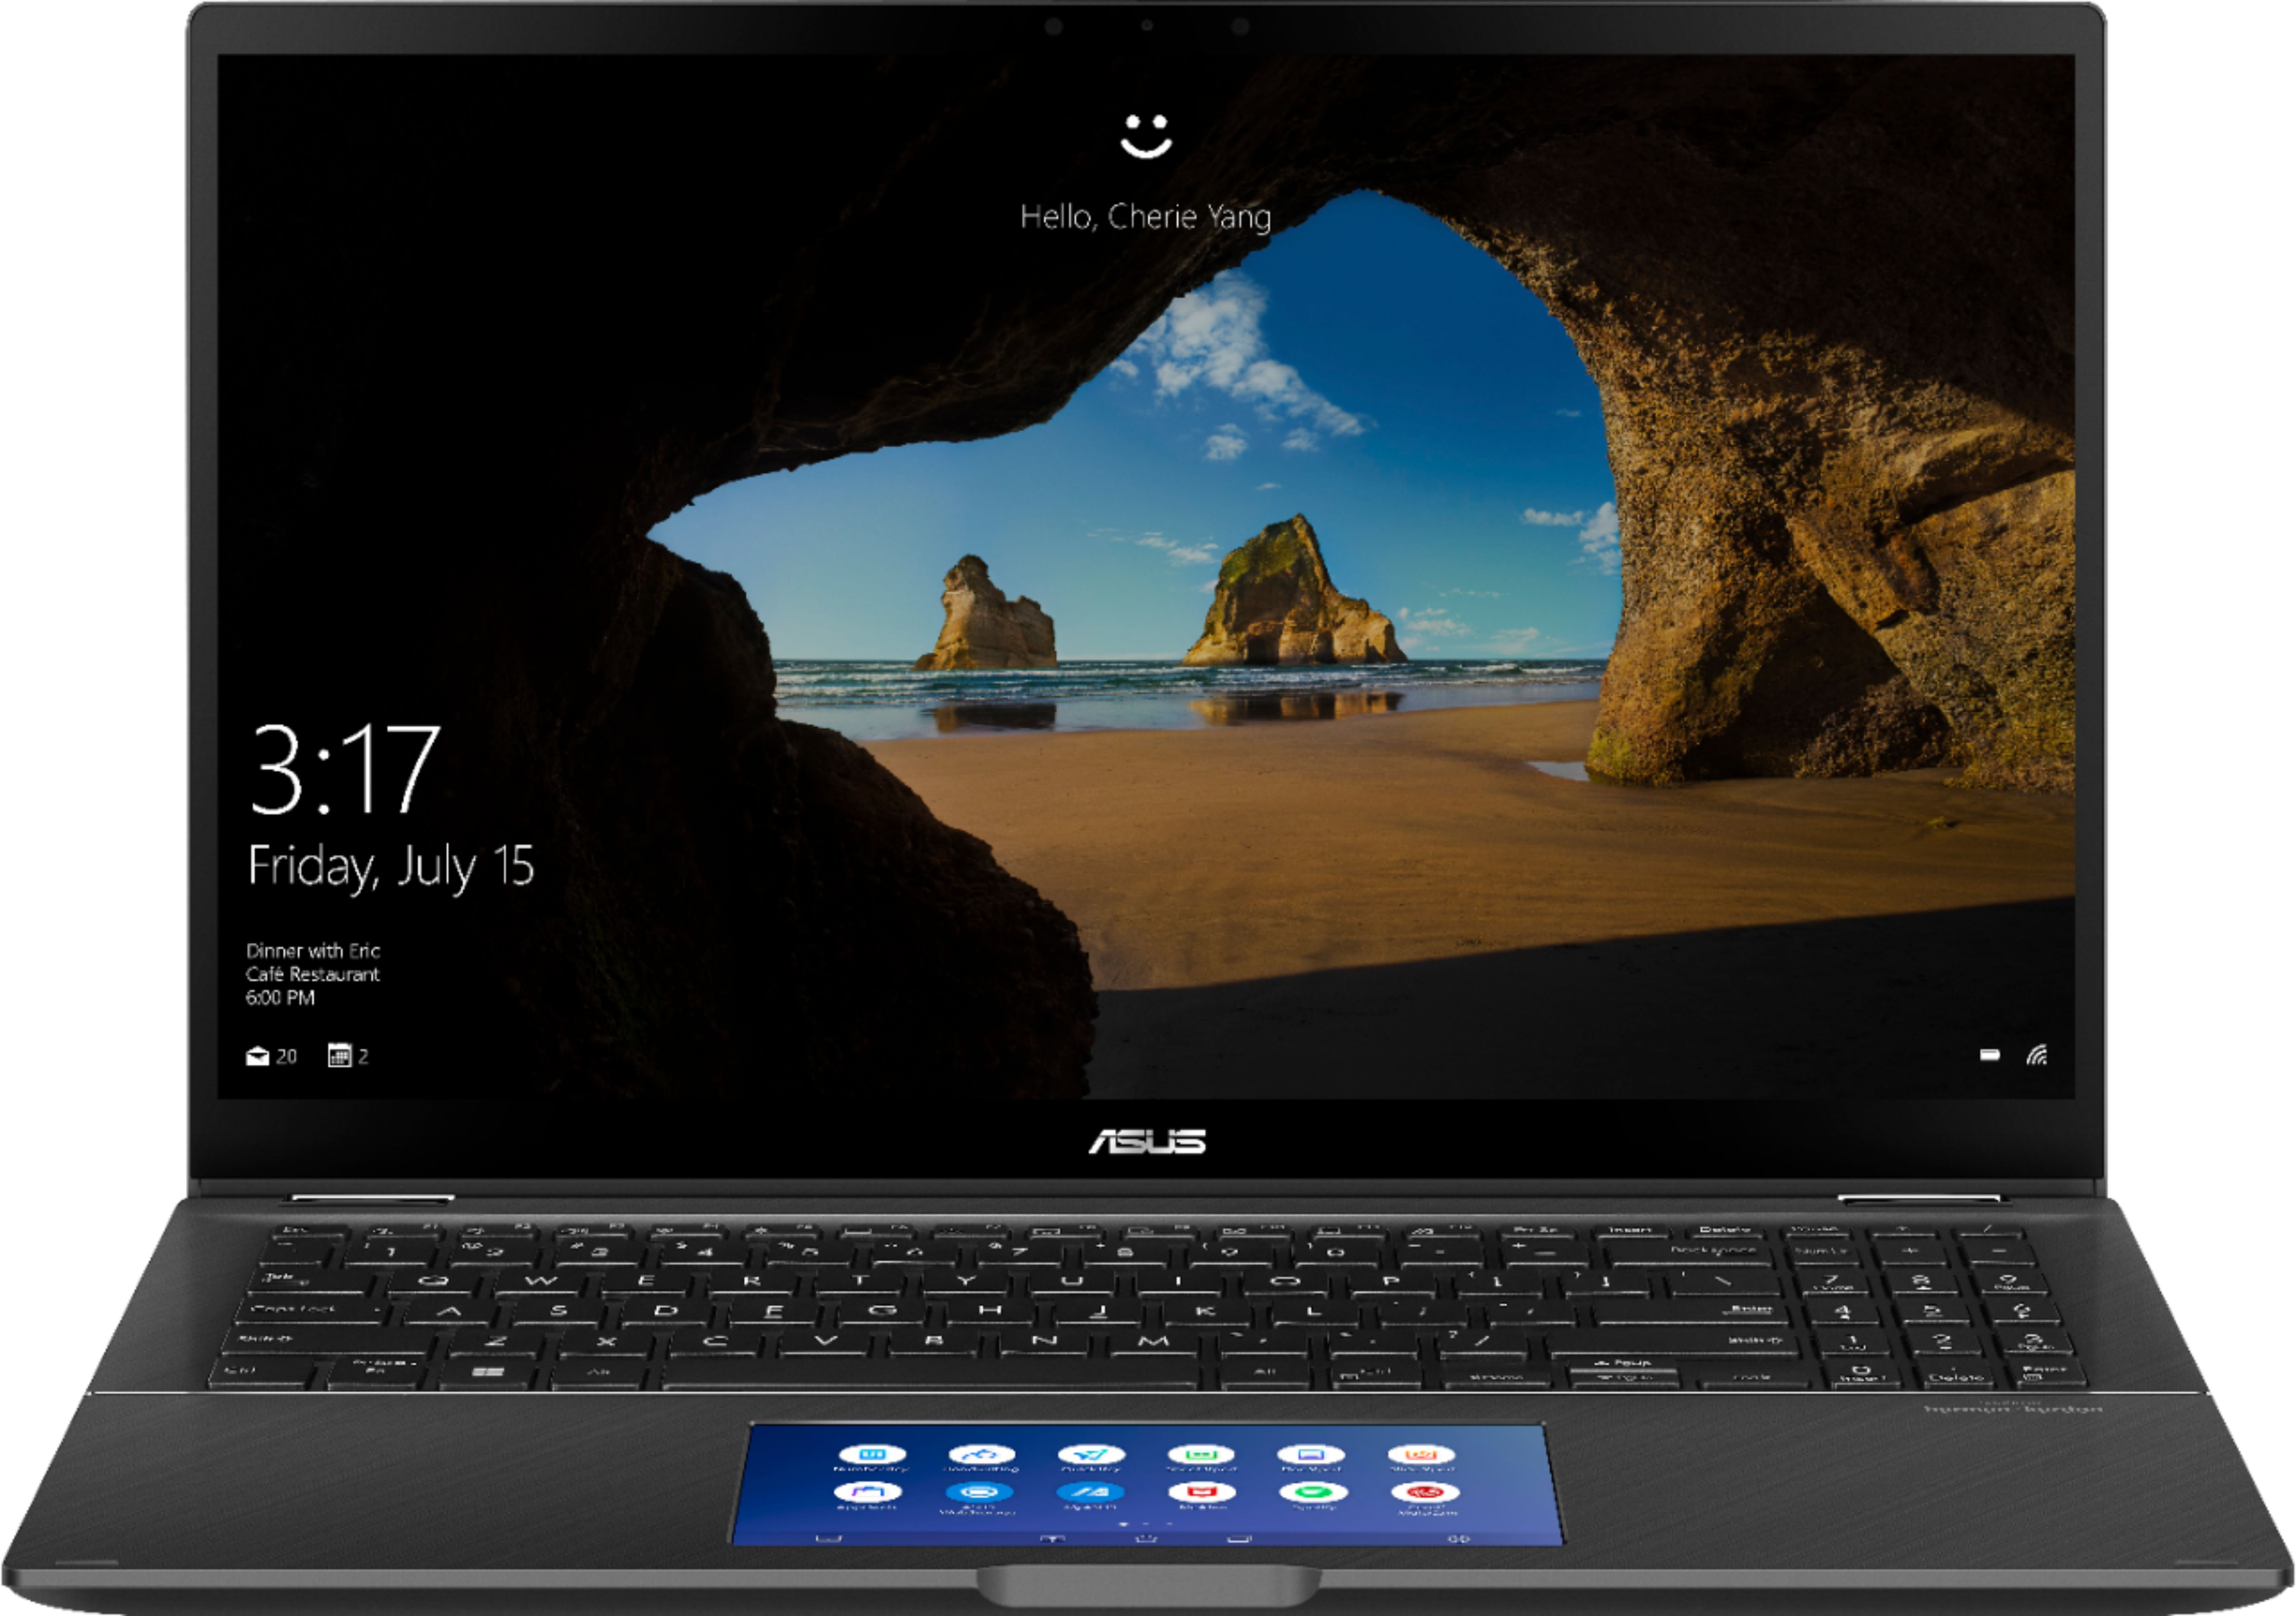 ASUS - Zenbook Flip 15.6" 4K Ultra HD Touch-Screen Laptop - Intel Core i7 - 16GB Memory - NVIDIA GeForce GTX 1050 - 1TB SSD - Gun Gray